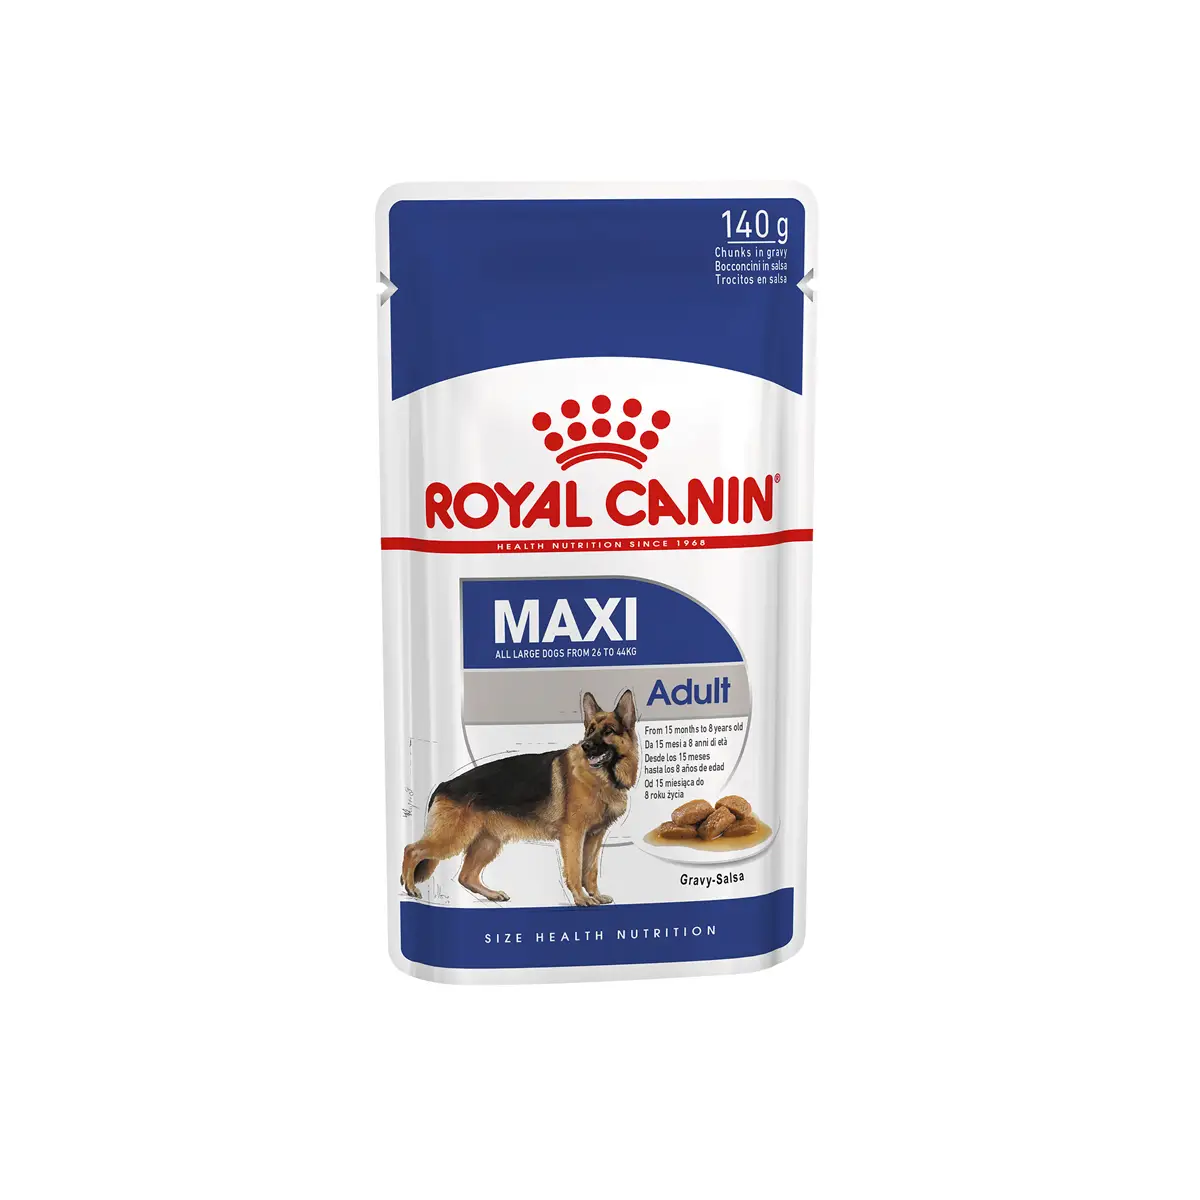 Royal Canin - Adult MAXI Gravy Wet Food 140g